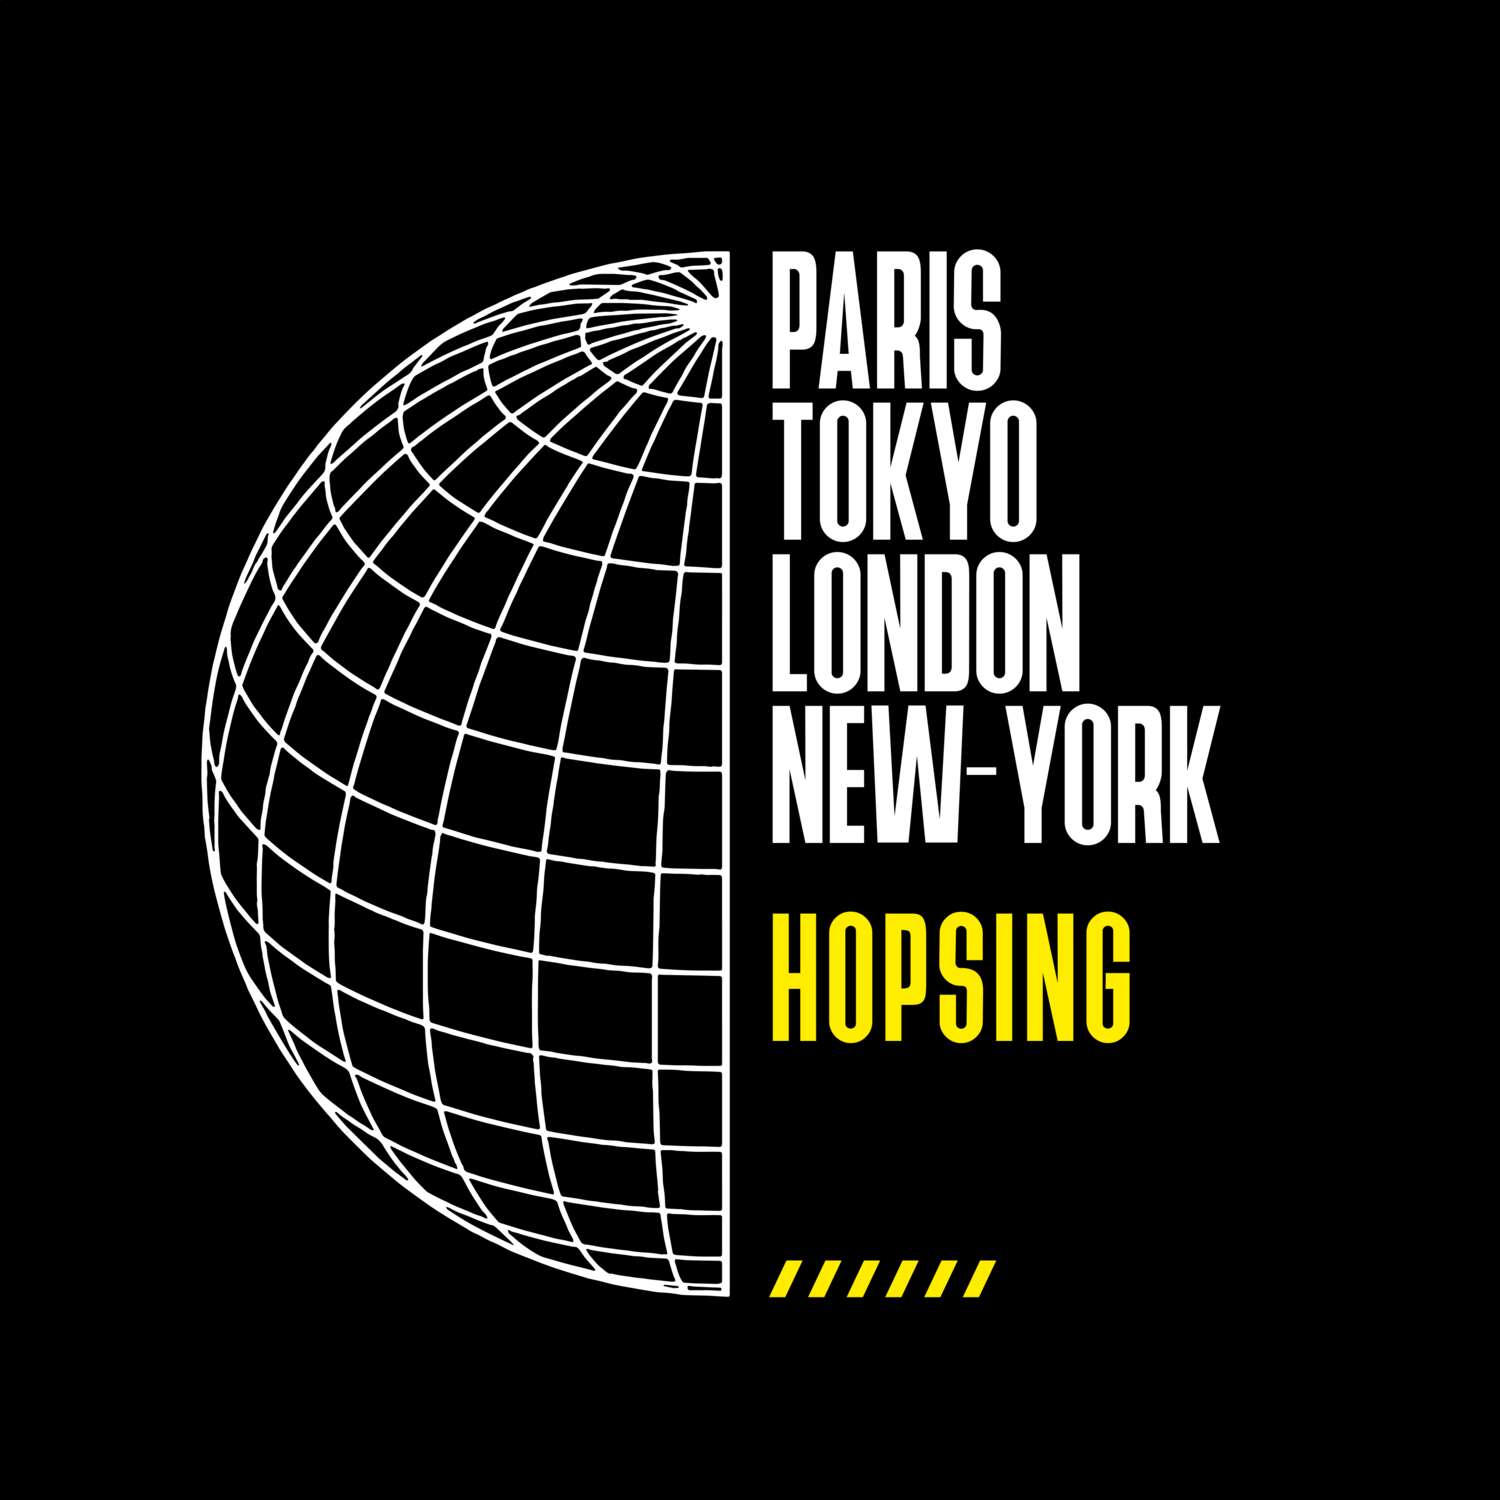 Hopsing T-Shirt »Paris Tokyo London«